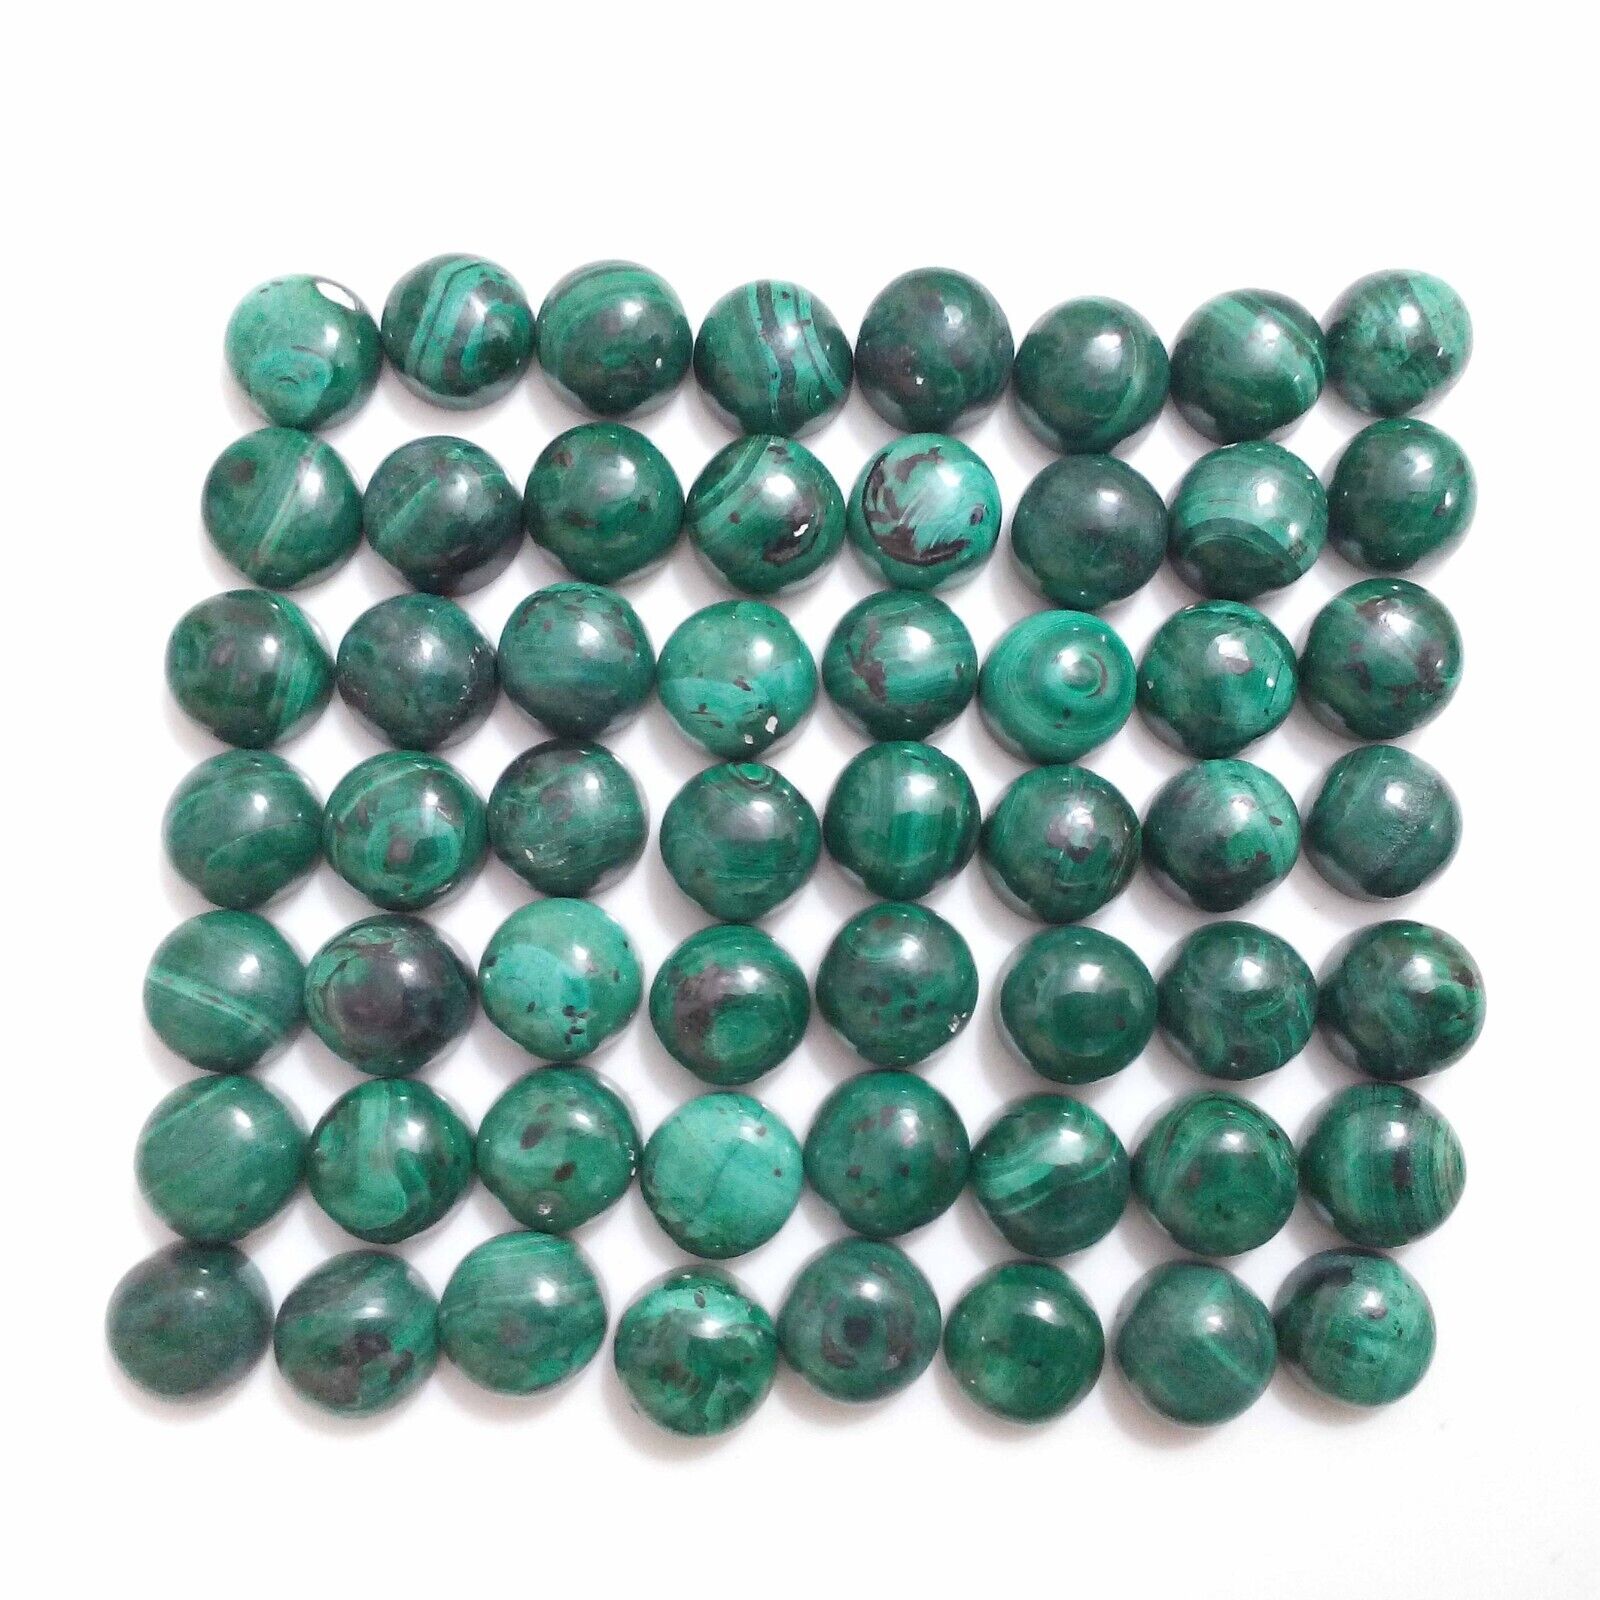 Amazing Green Malachite Loose Gemstone Round Shape 56 Pcs Lot For Making Jewelry